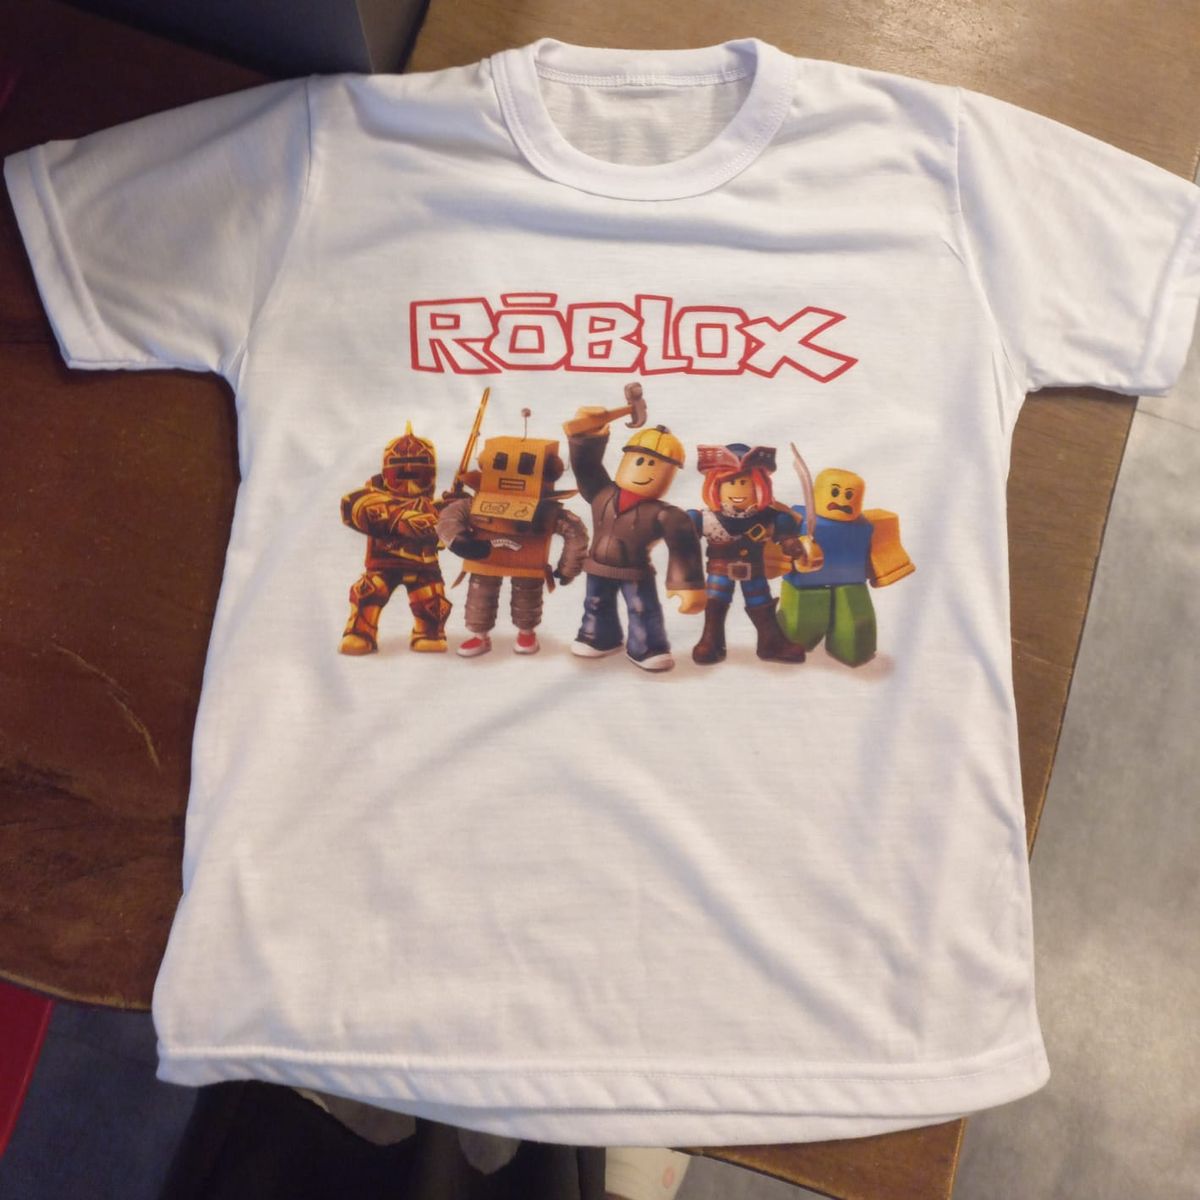 Camiseta Roblox Modelo 13